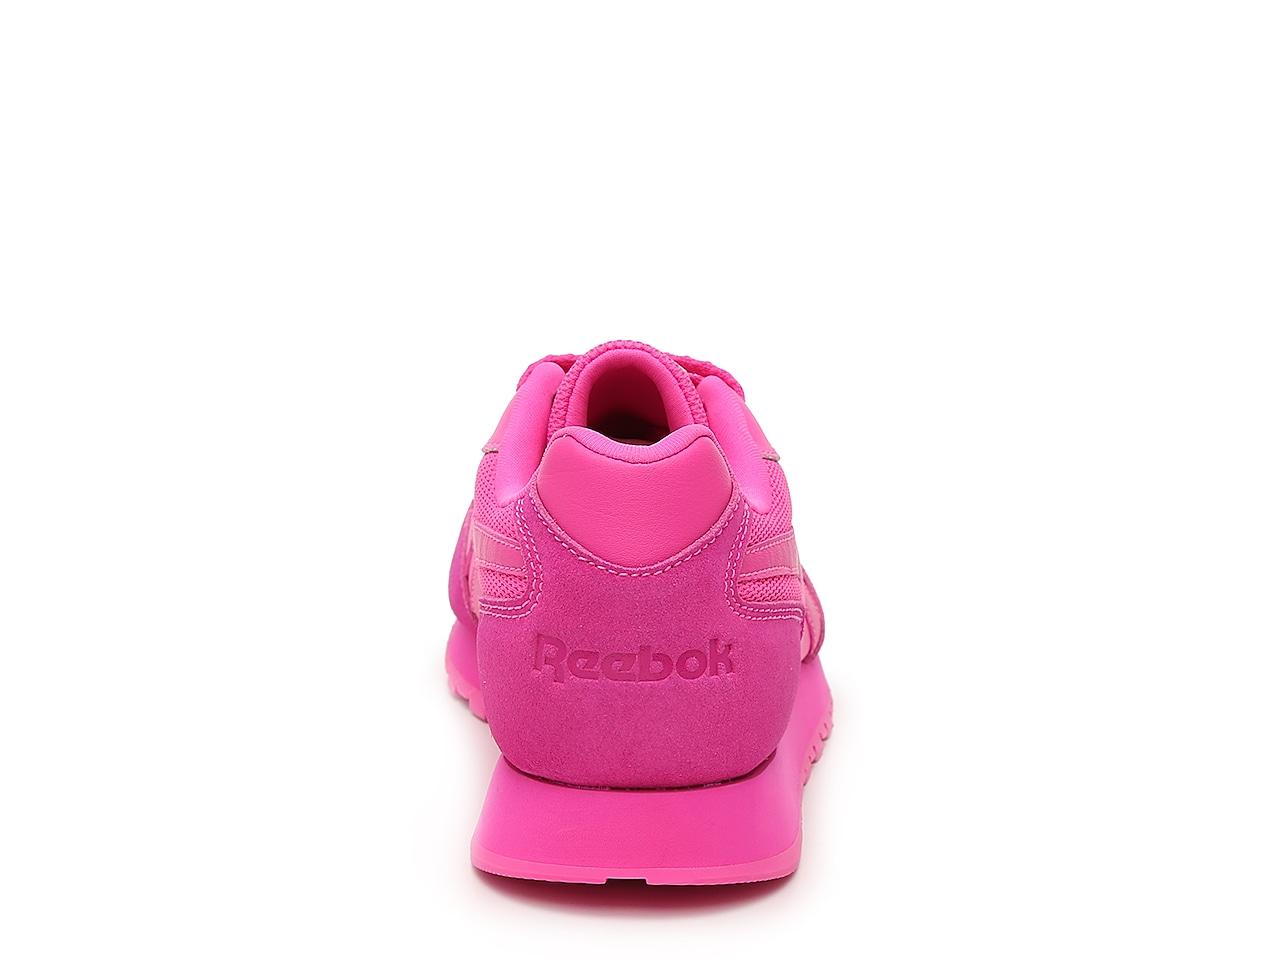 Reebok Classic Harman Run Sneaker in Hot Pink (Pink) - Lyst